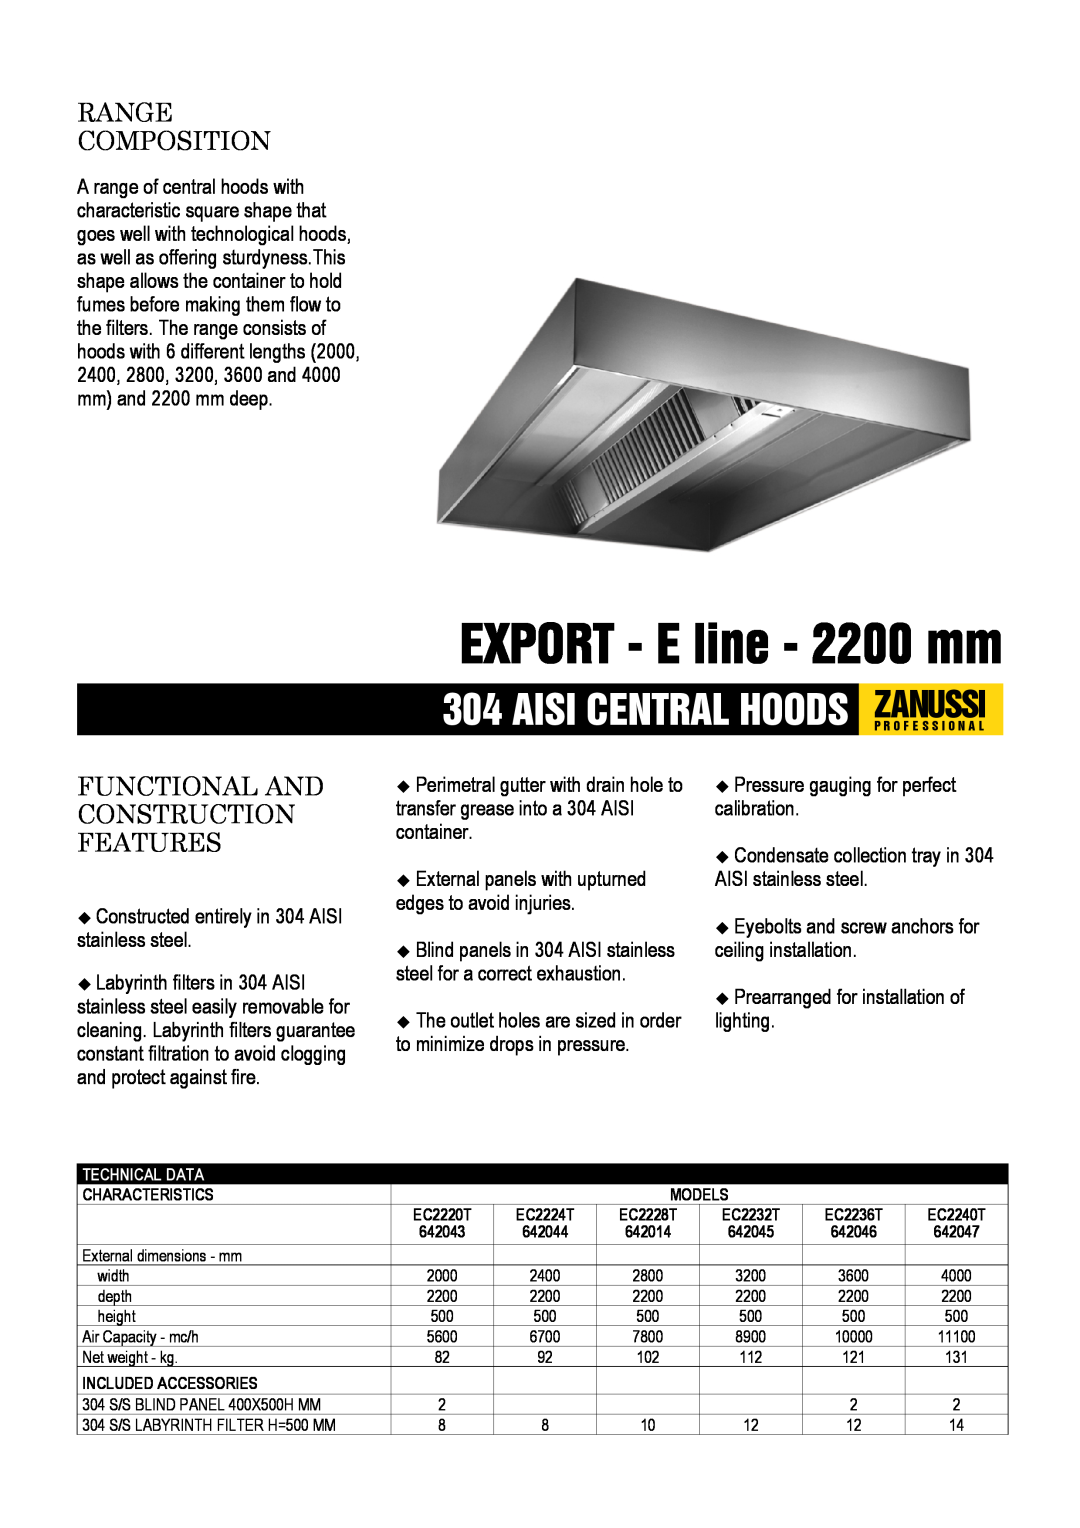 Zanussi EC2236T, EC2224T dimensions EXPORT - E line - 2200 mm, Range Composition, Functional And Construction Features 